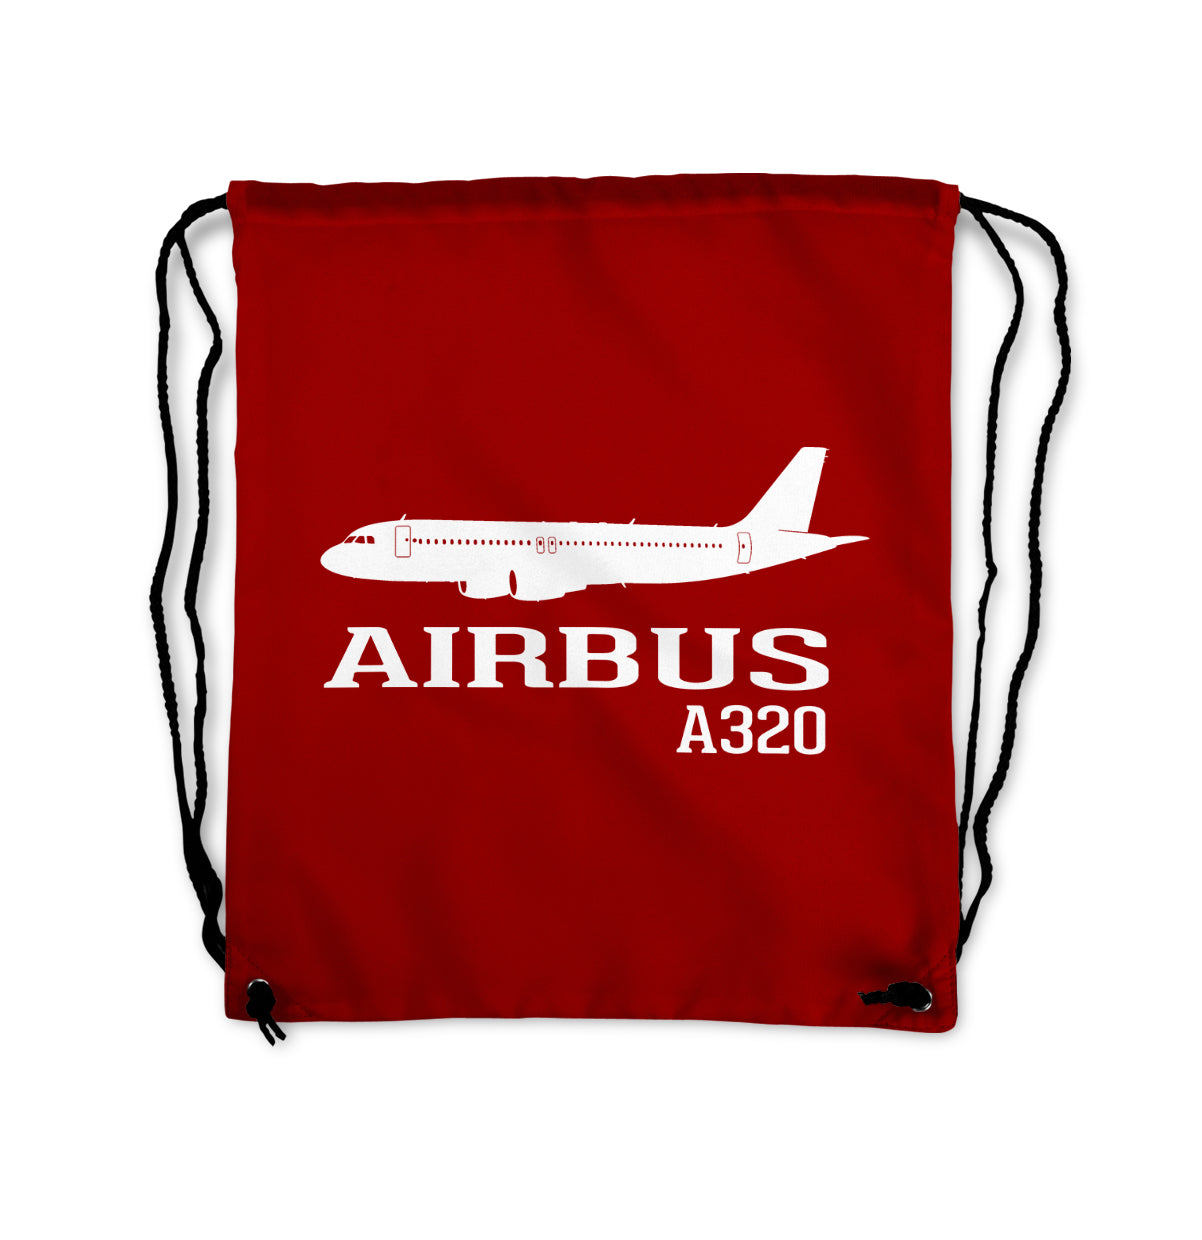 Airbus A320 Printed Designed Drawstring Bags